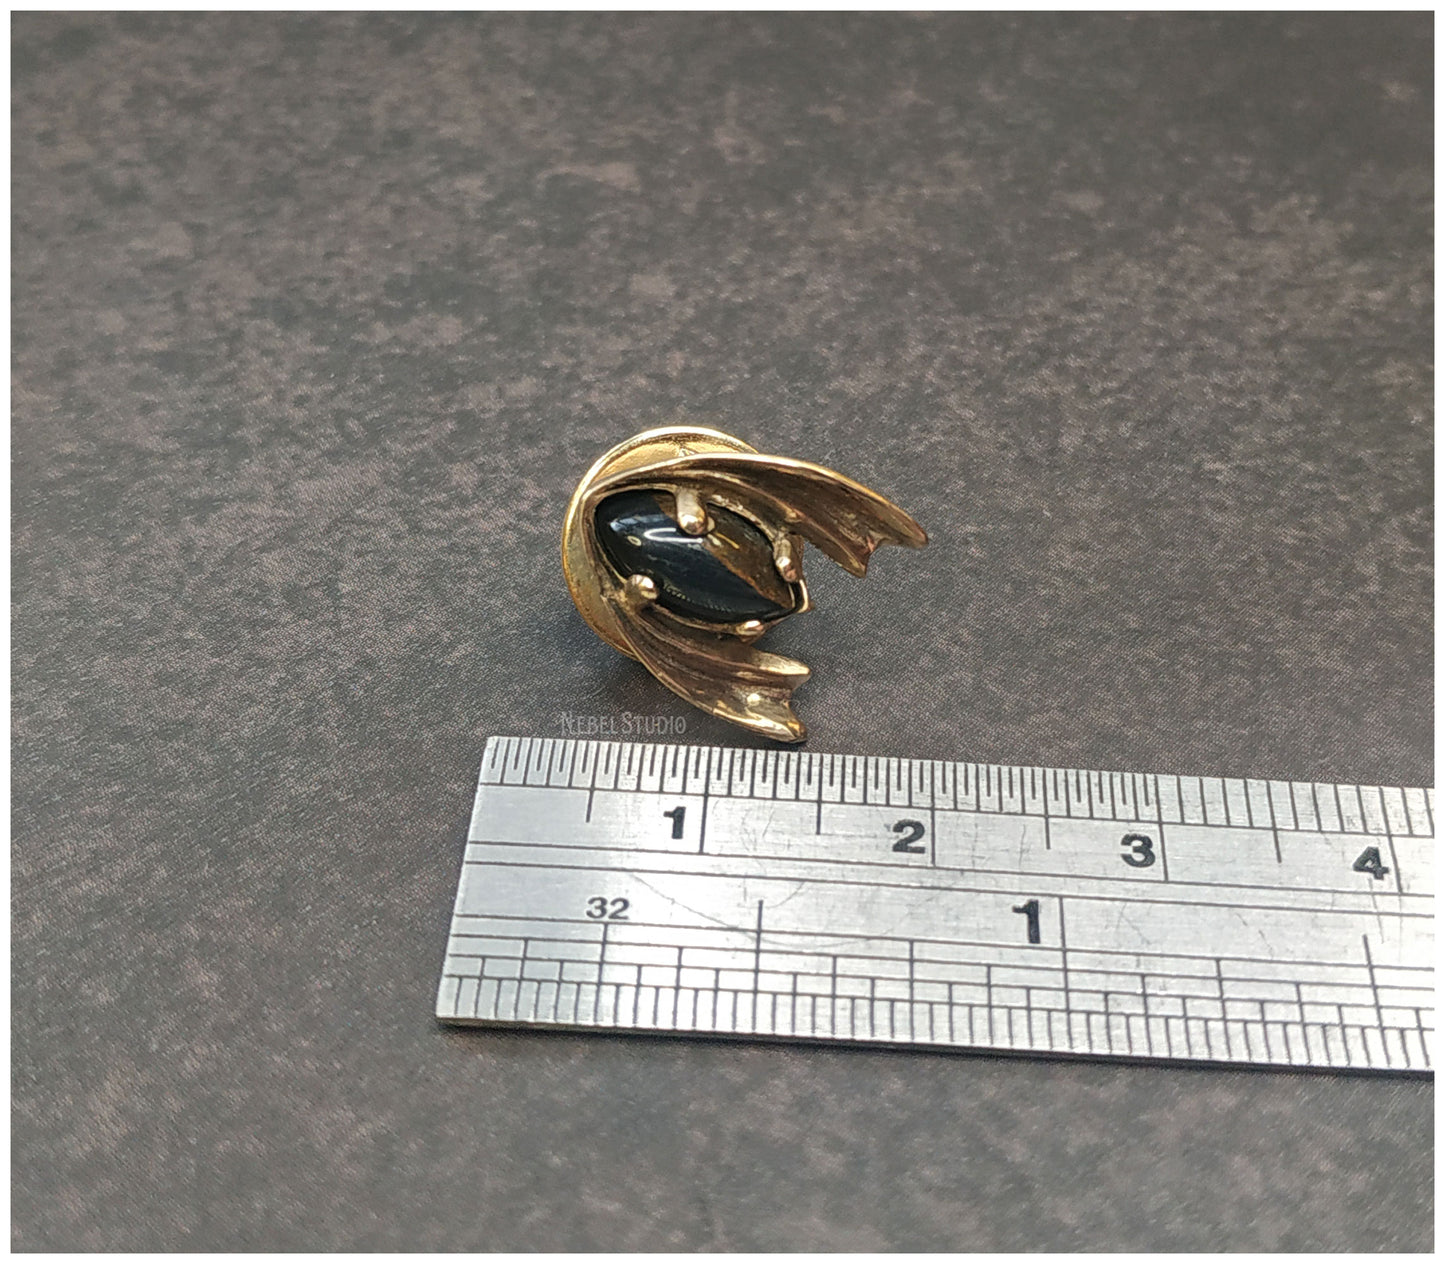 Bronze Moth Pin with Veined Onyx OOAK